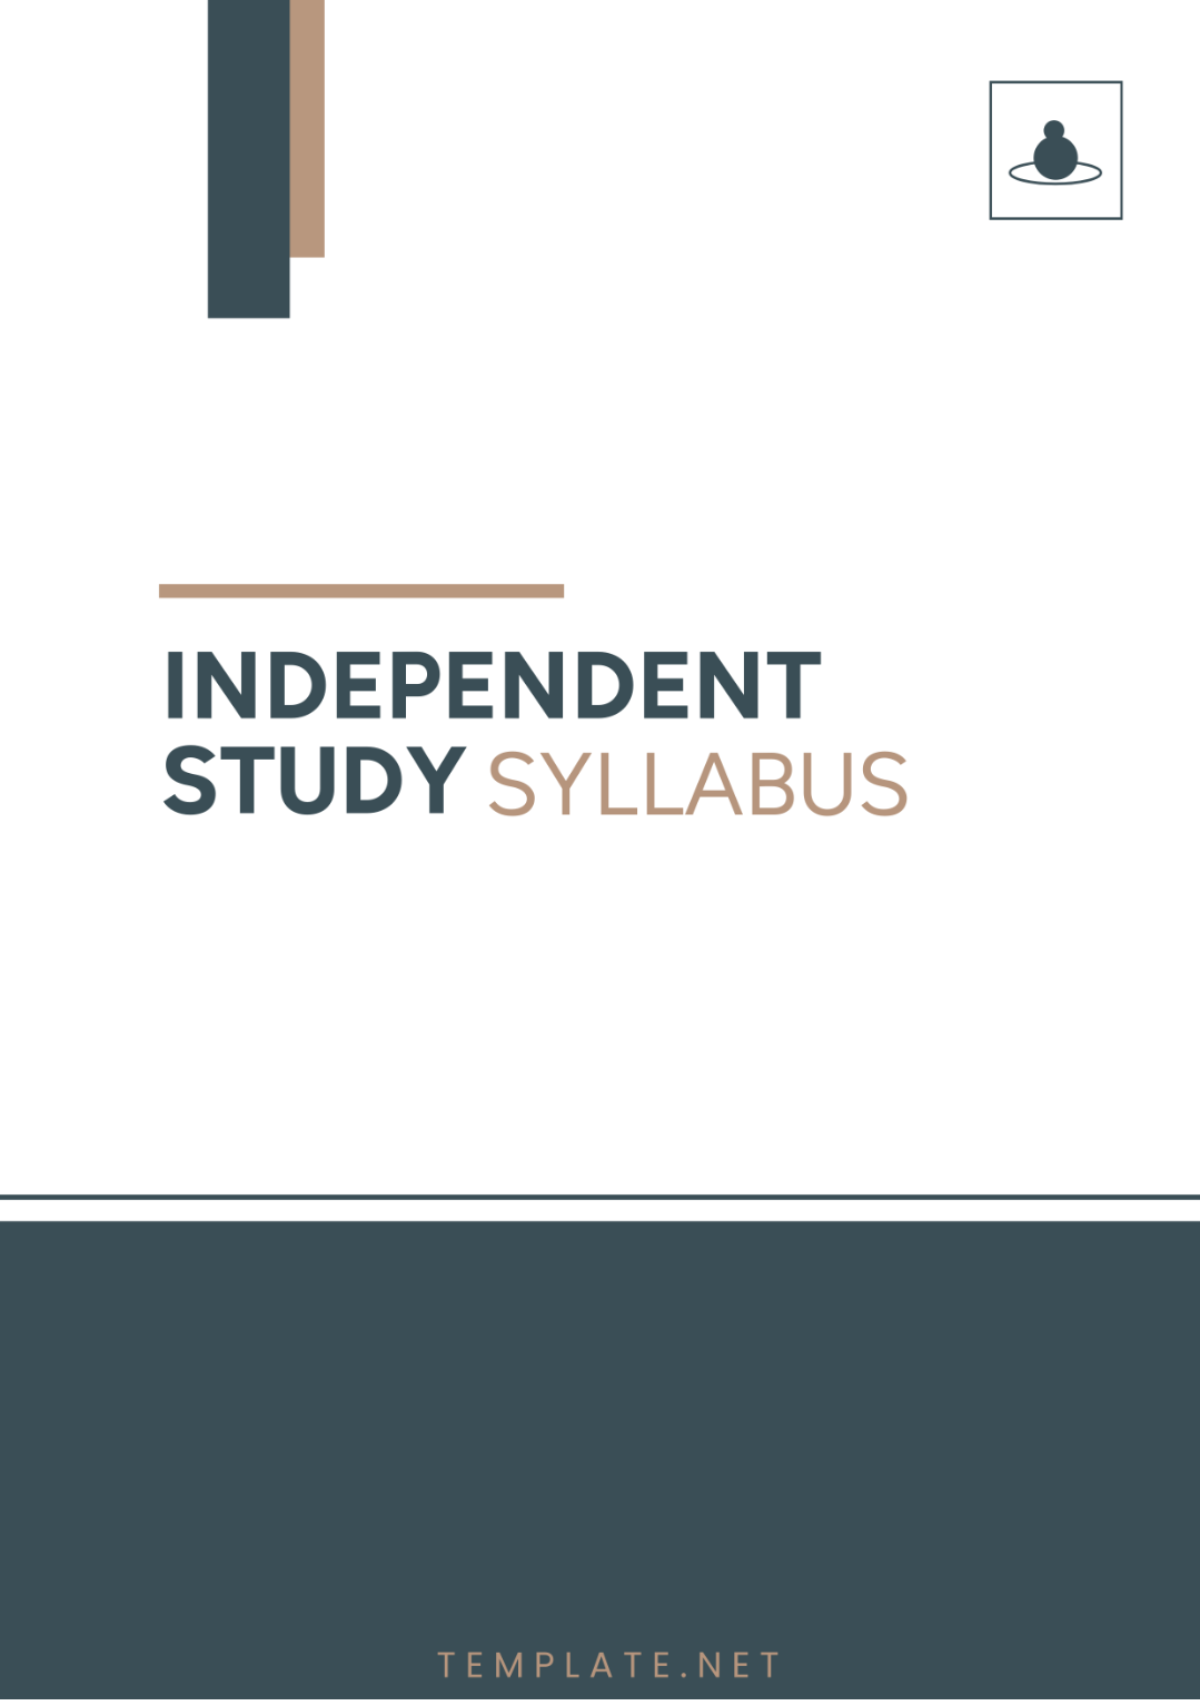 Independent Study Syllabus Template